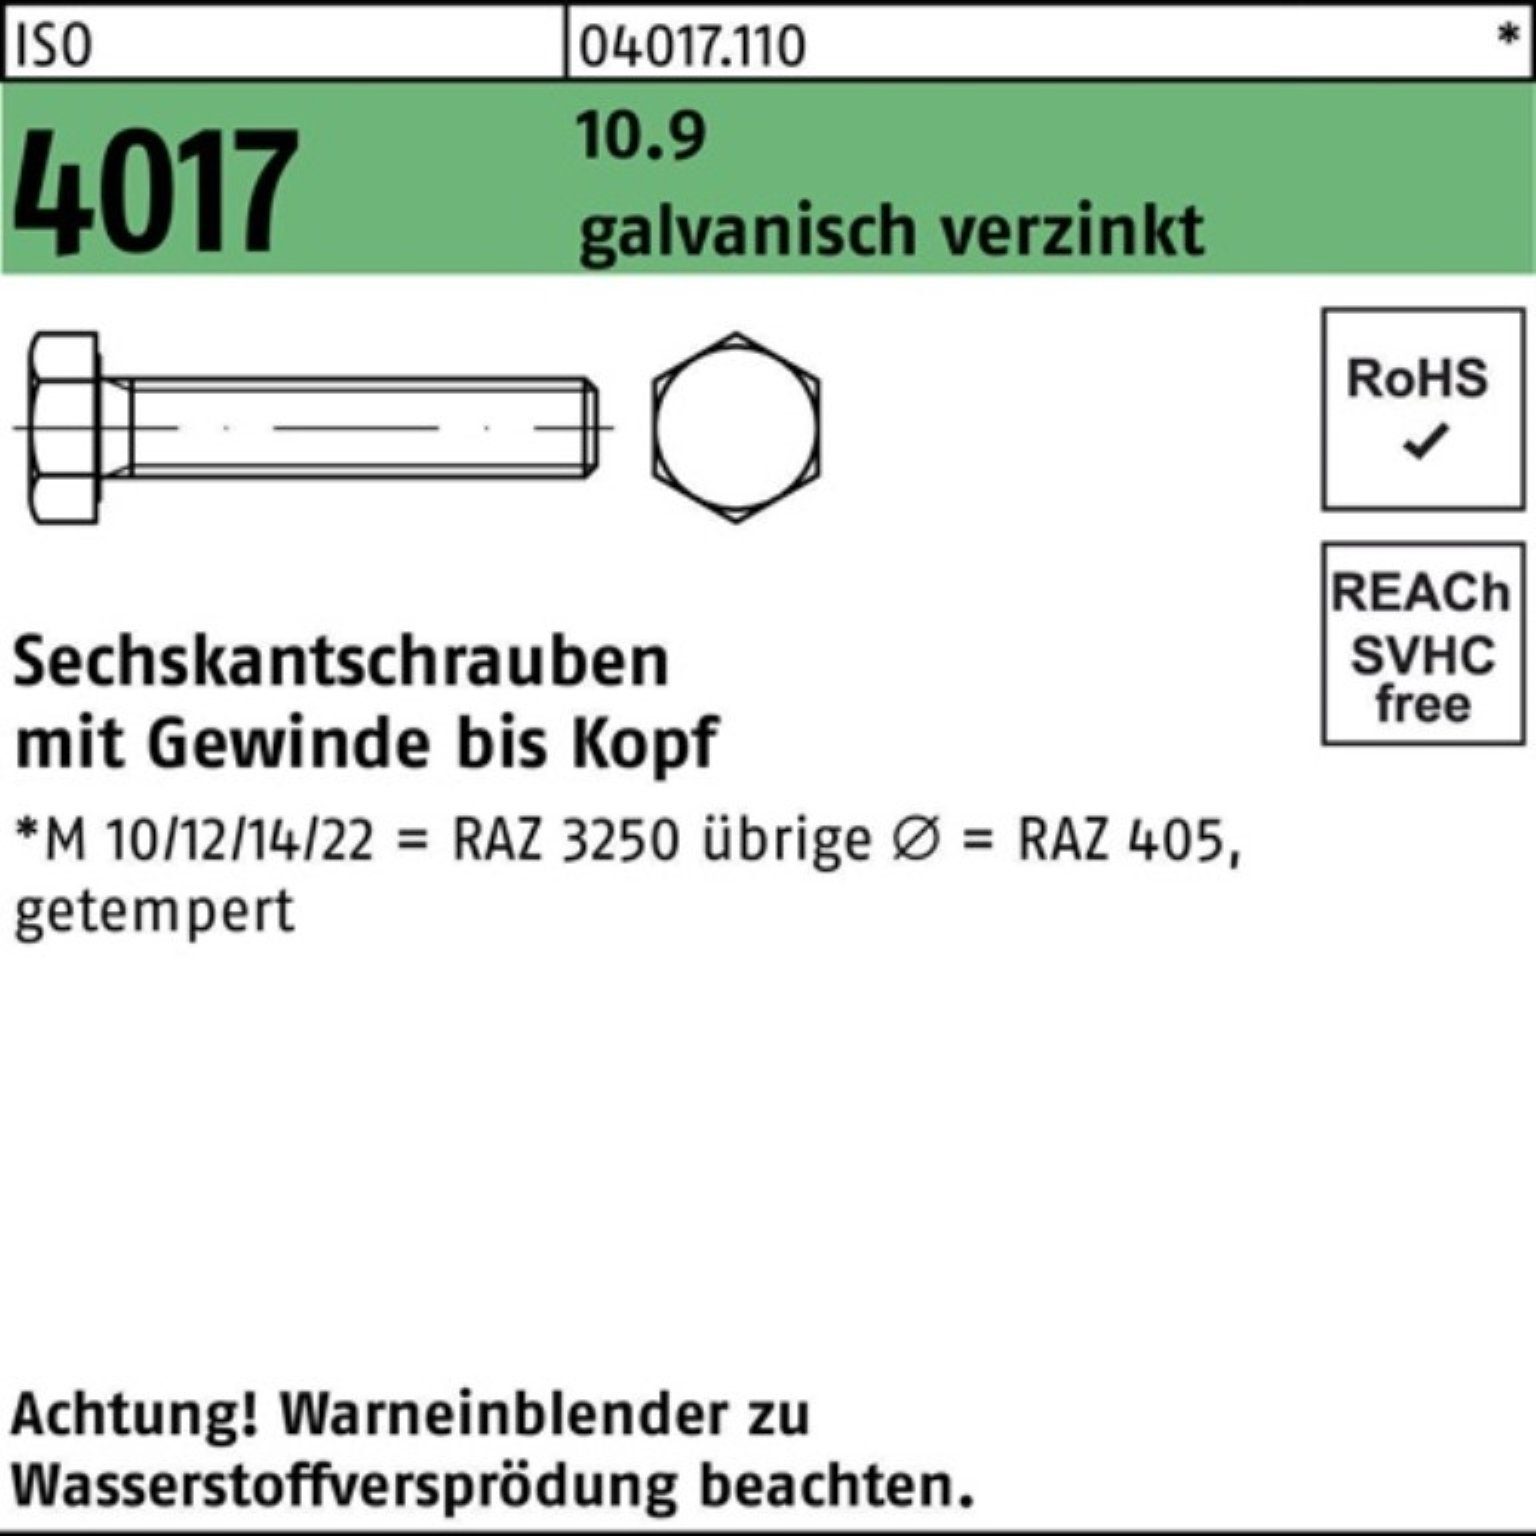 Sechskantschraube 4017 M10x Pack 100er ISO galv.verz. 10.9 Sechskantschraube Bufab VG 55 S 100